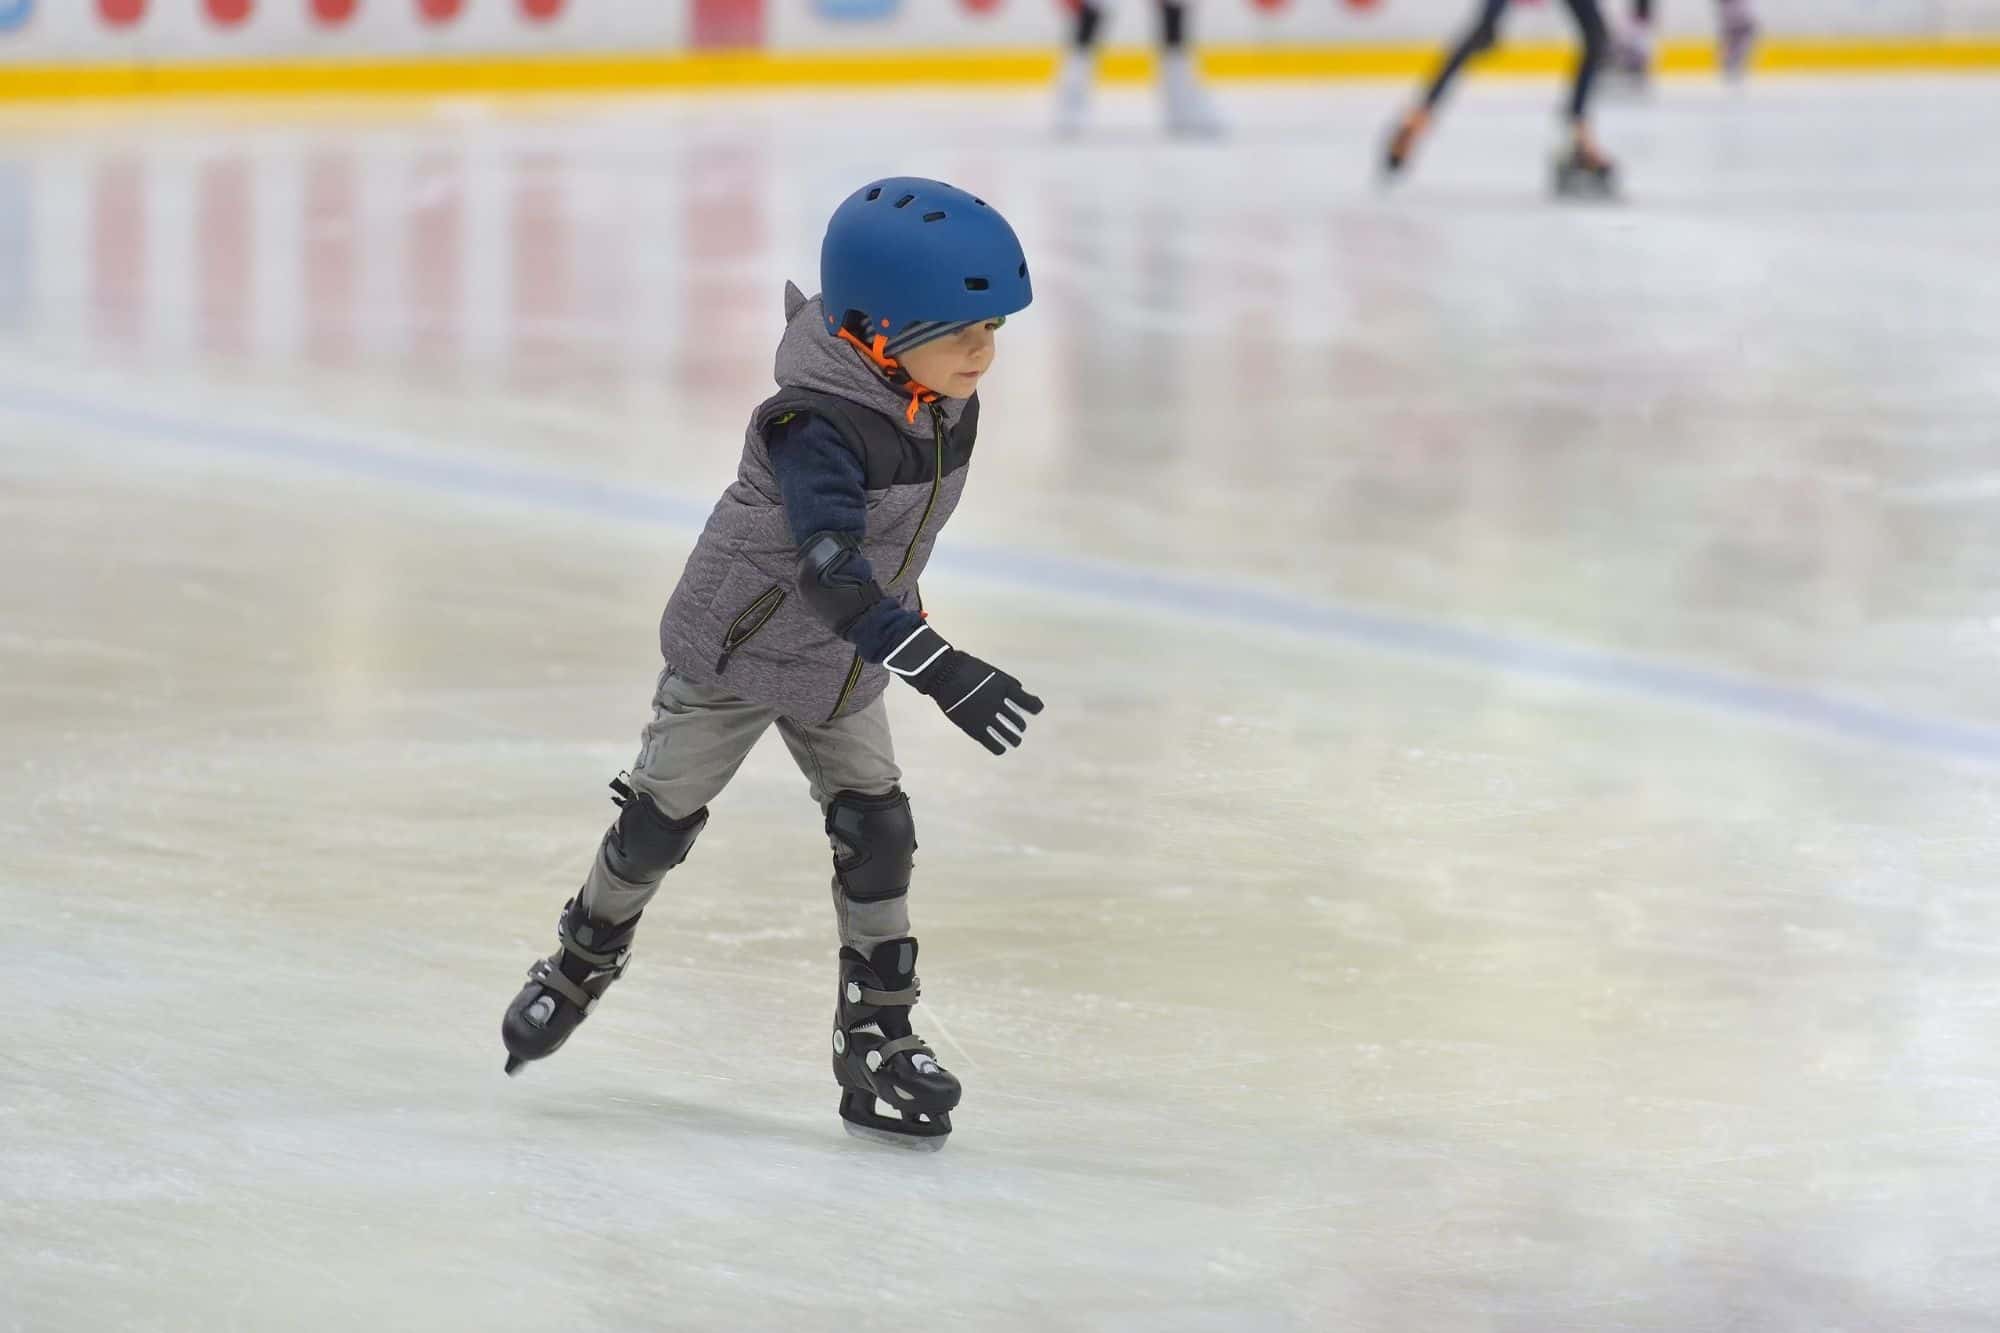 Young boy learning on hockey skates